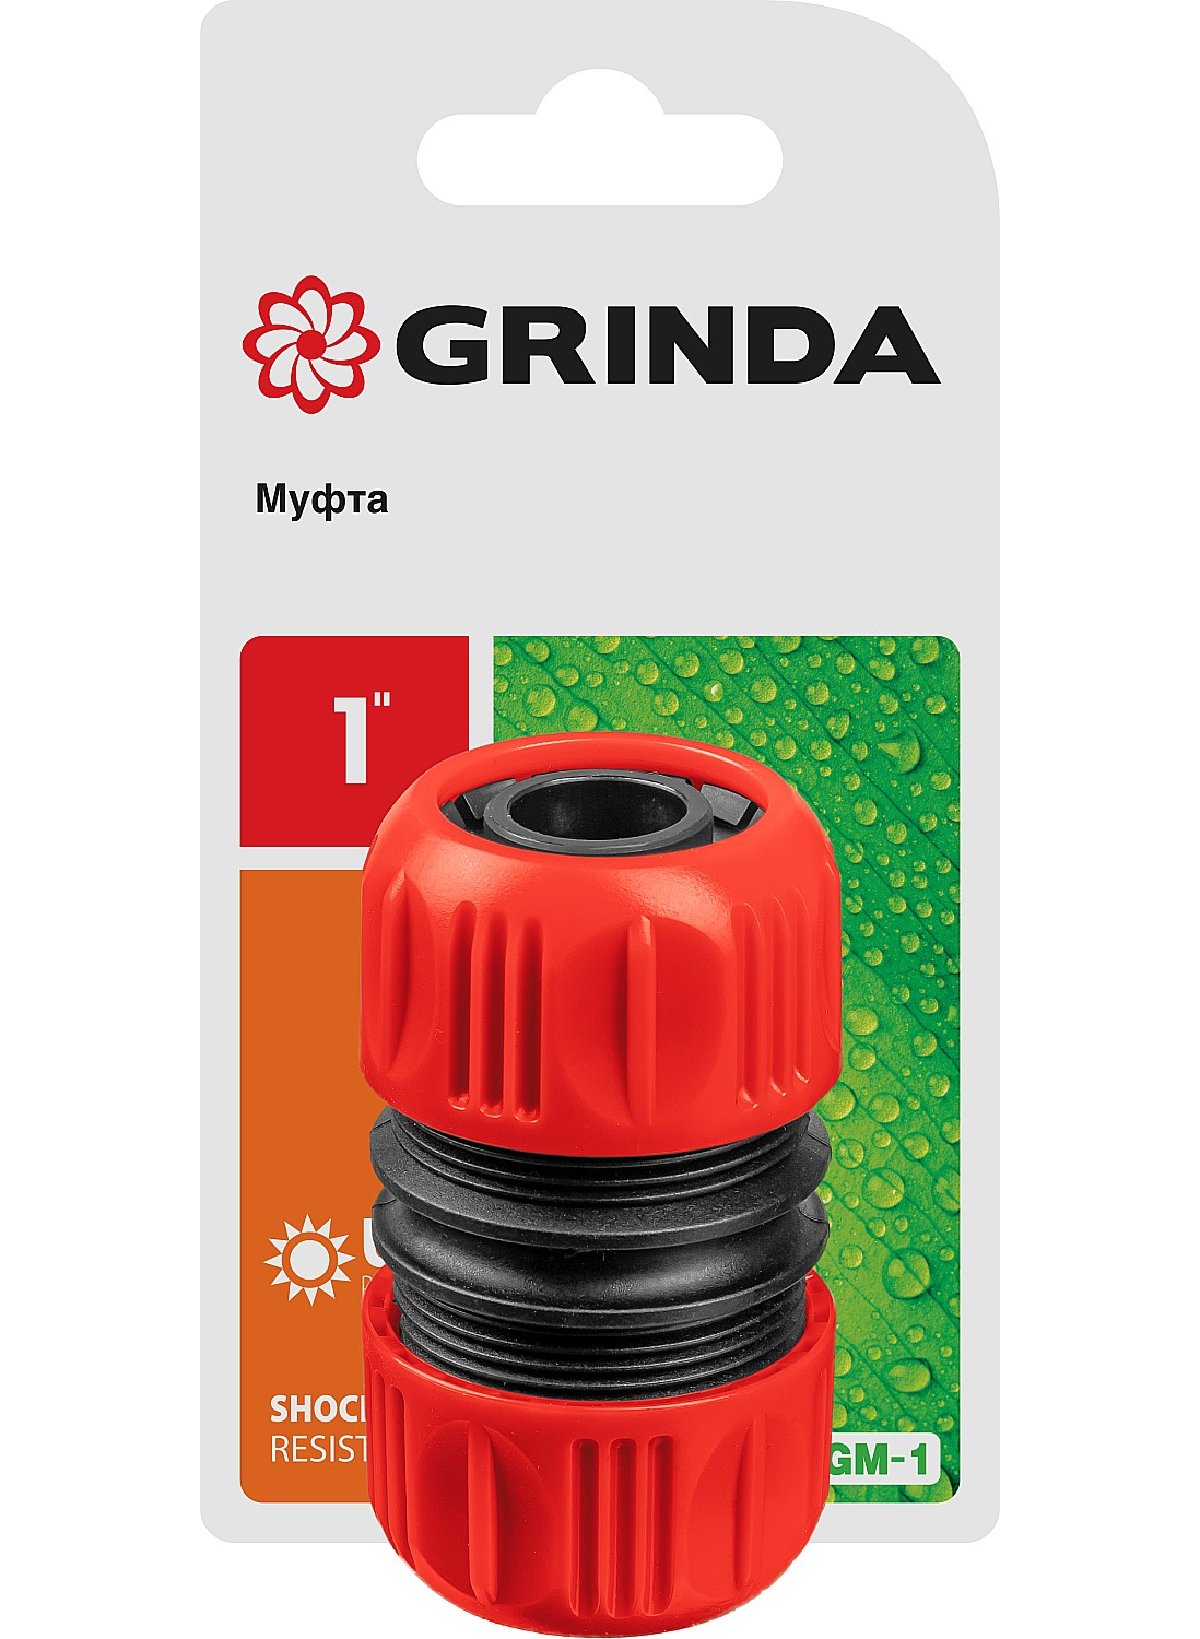   GRINDA GM-1  , 1 (8-426340)